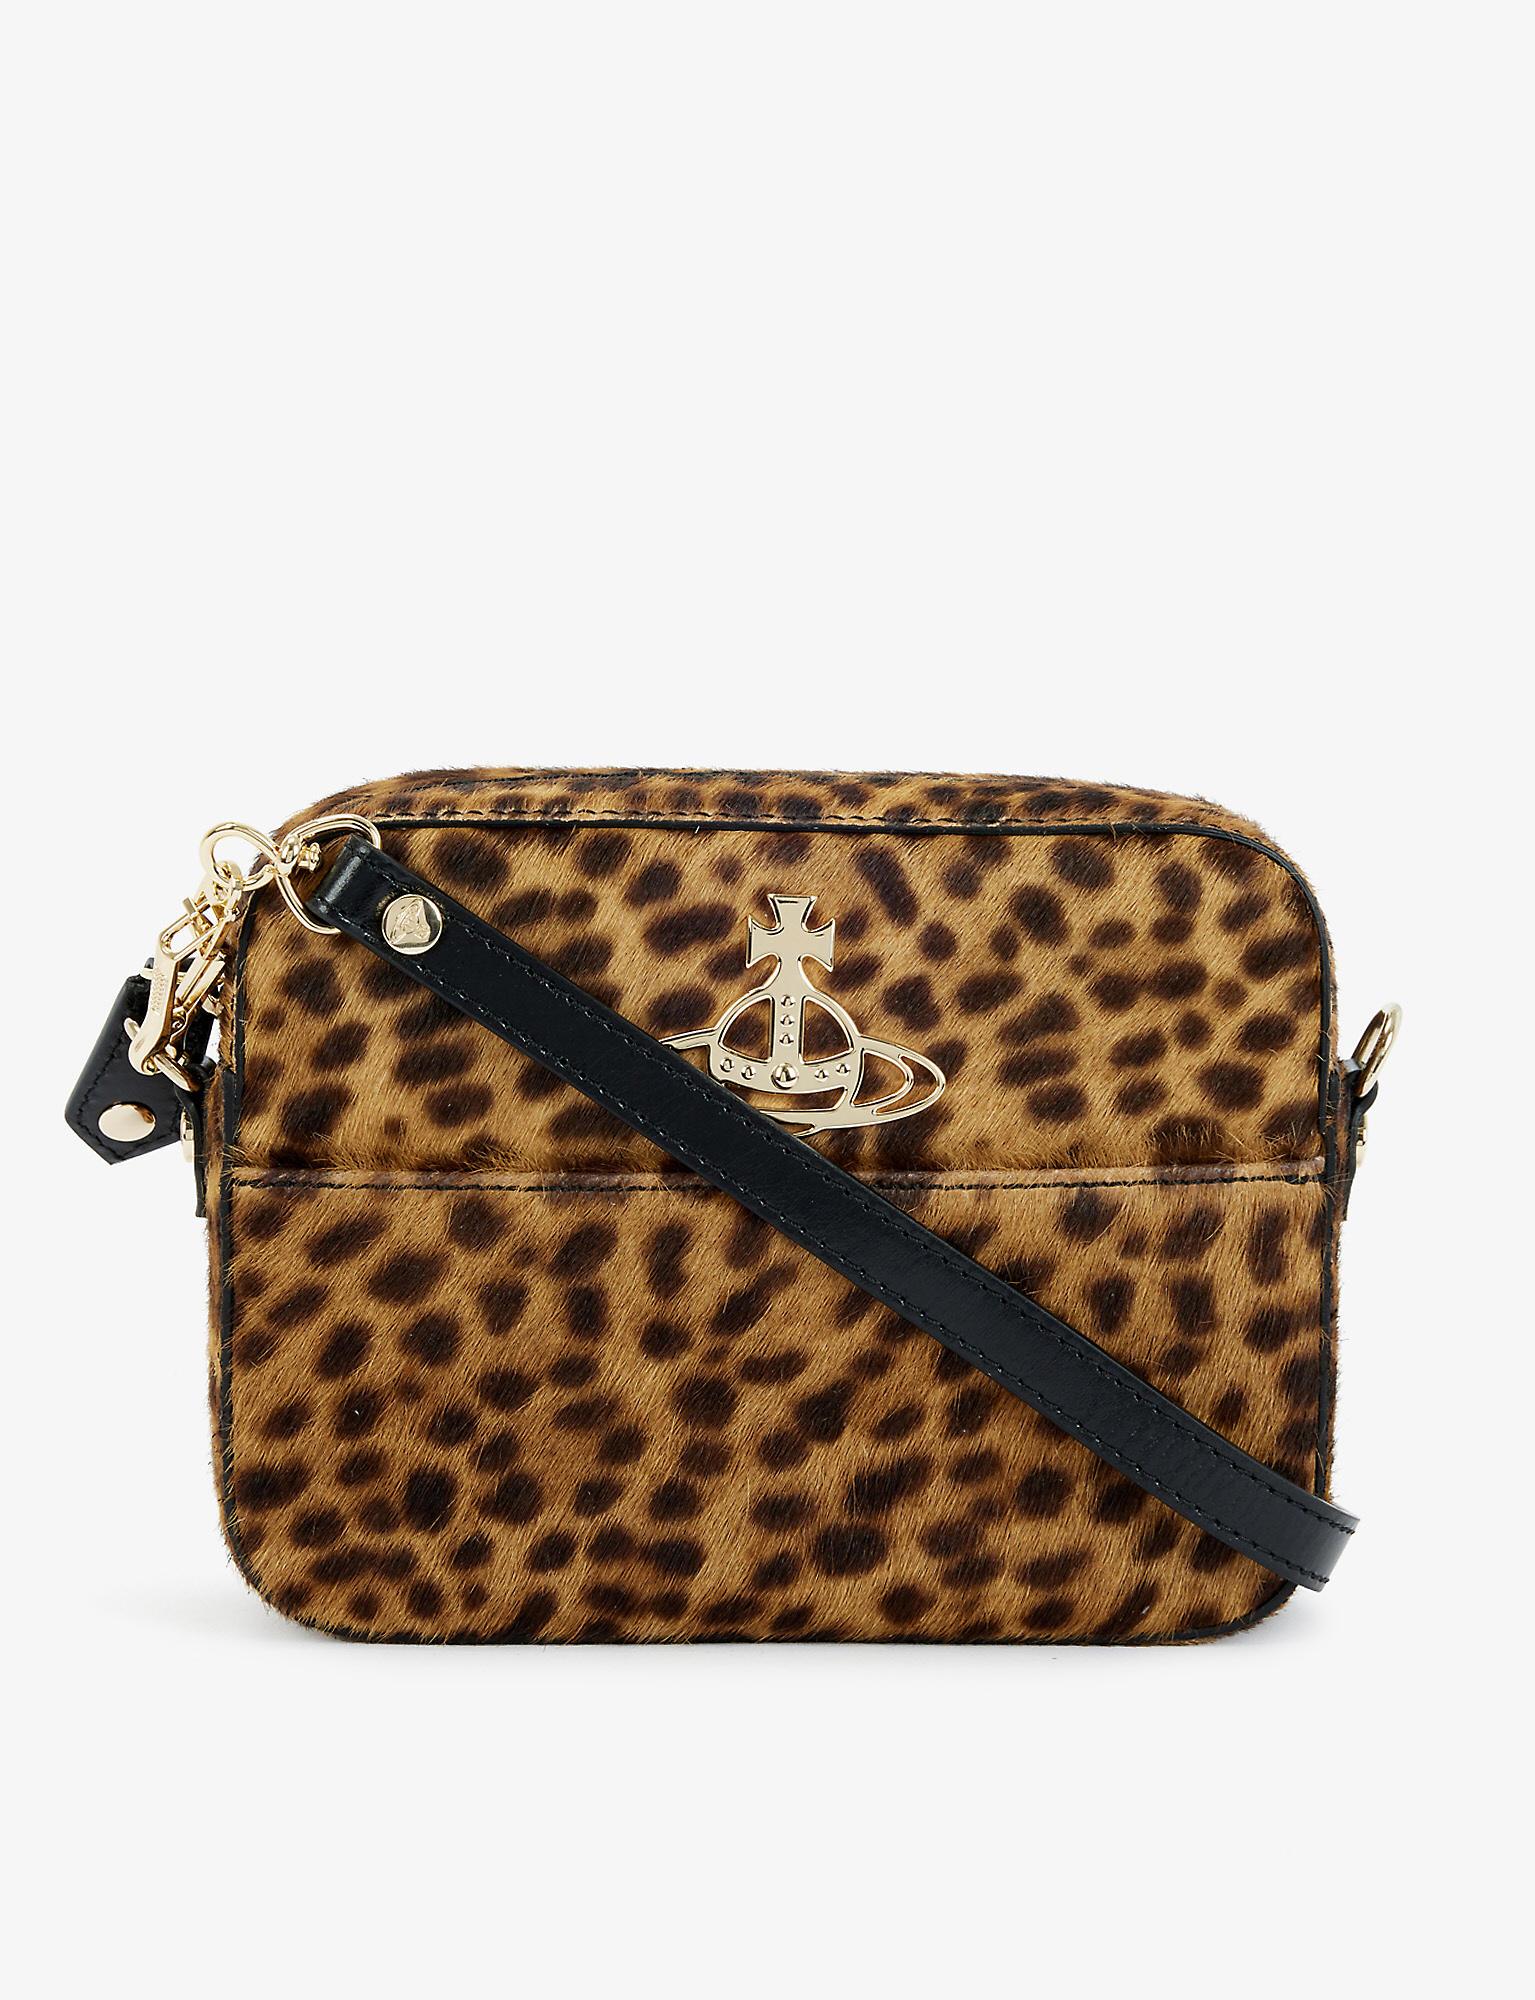 Vivienne Westwood Rachel Leather Cross-body Bag in Leopard (Brown ...